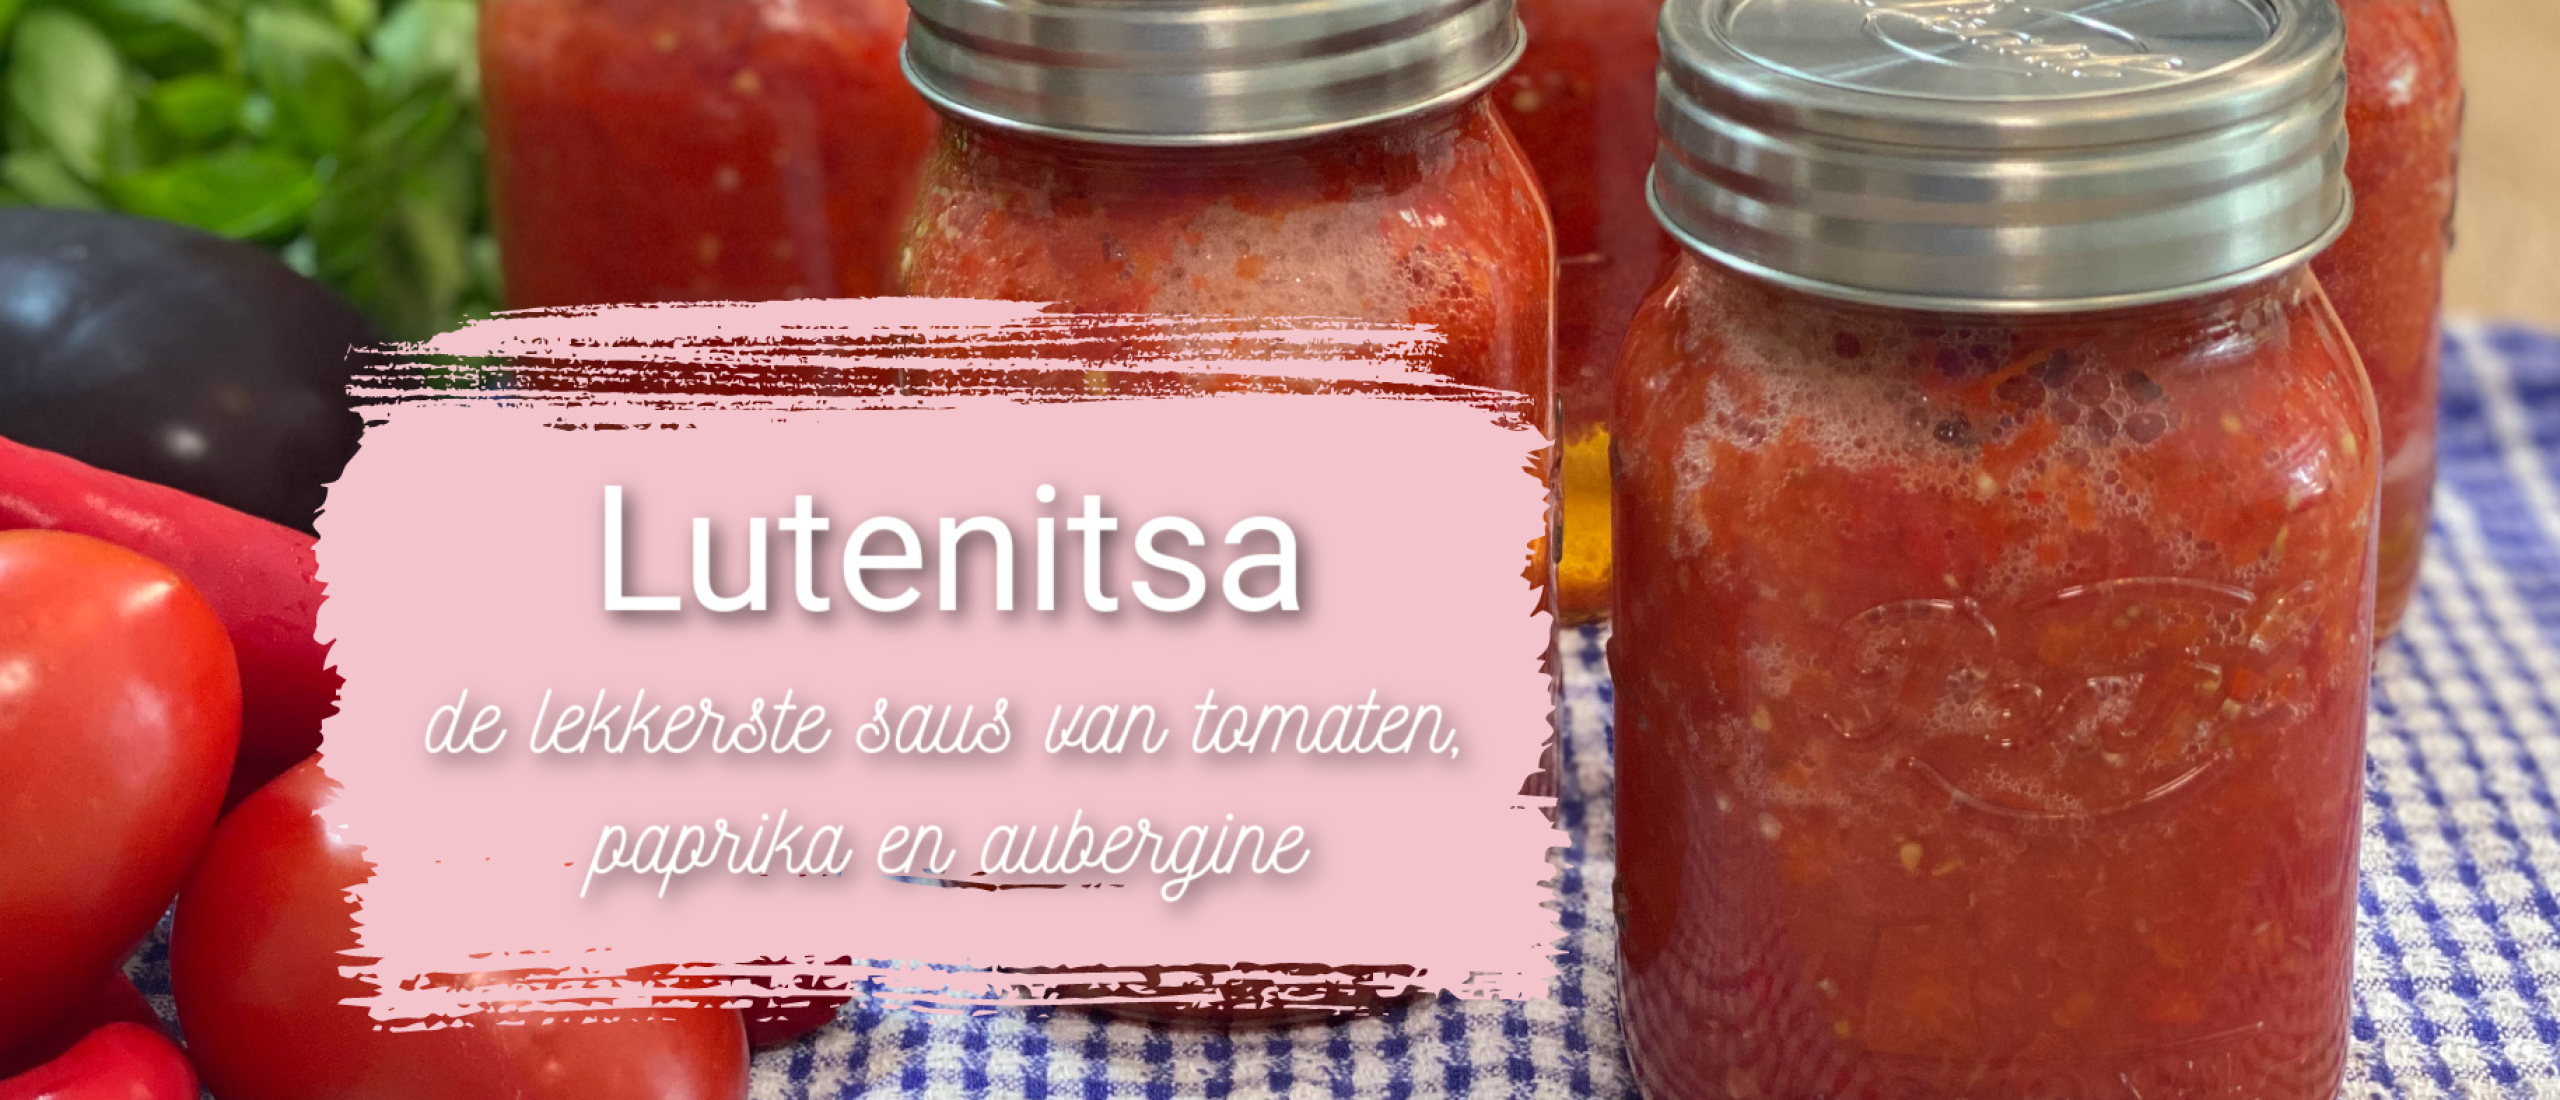 Lutenitsa, de lekkerste saus van tomaten, paprika en aubergine